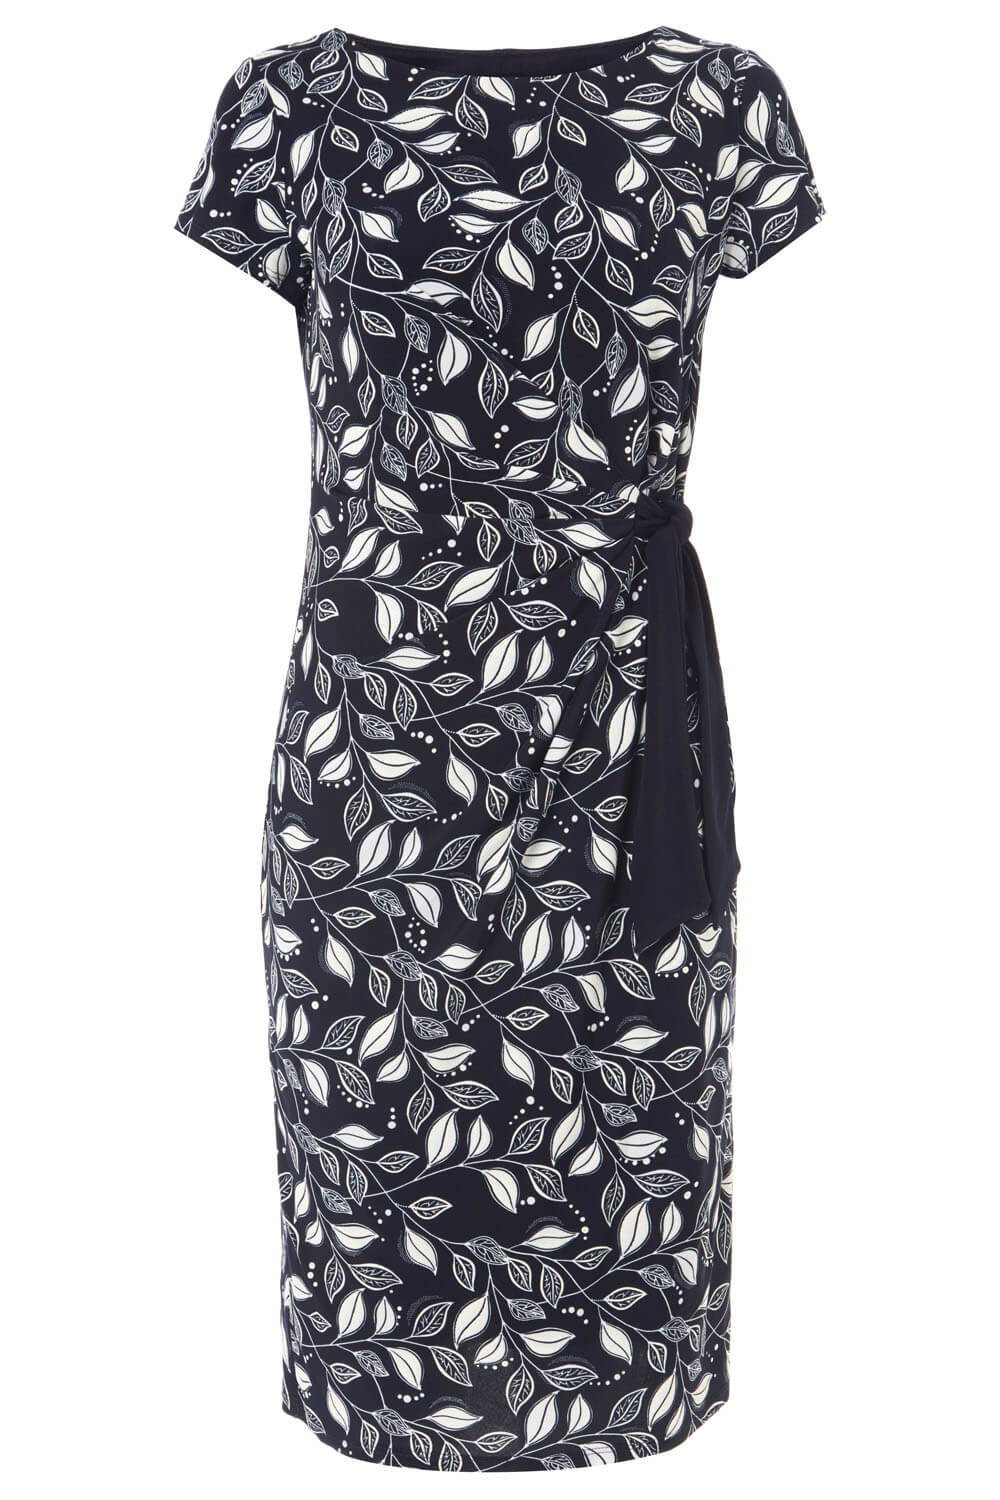  Leaf Print Side Tie Dress, Image 5 of 5